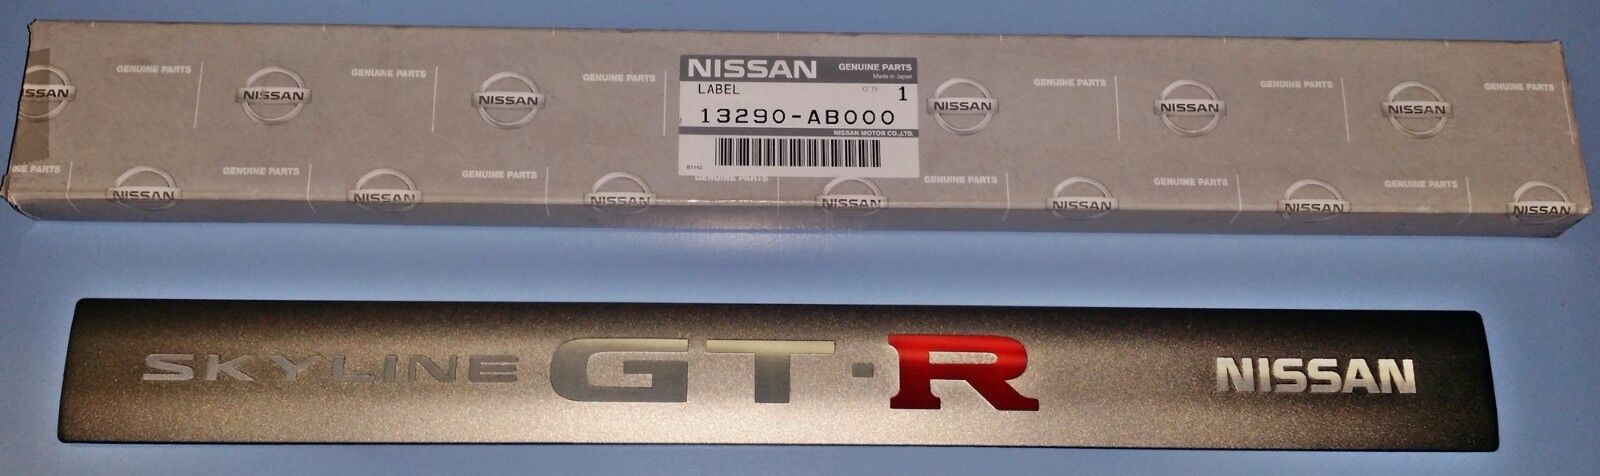 Nissan A3B90-AB000 RB26DETT Engine Ornament Badge \